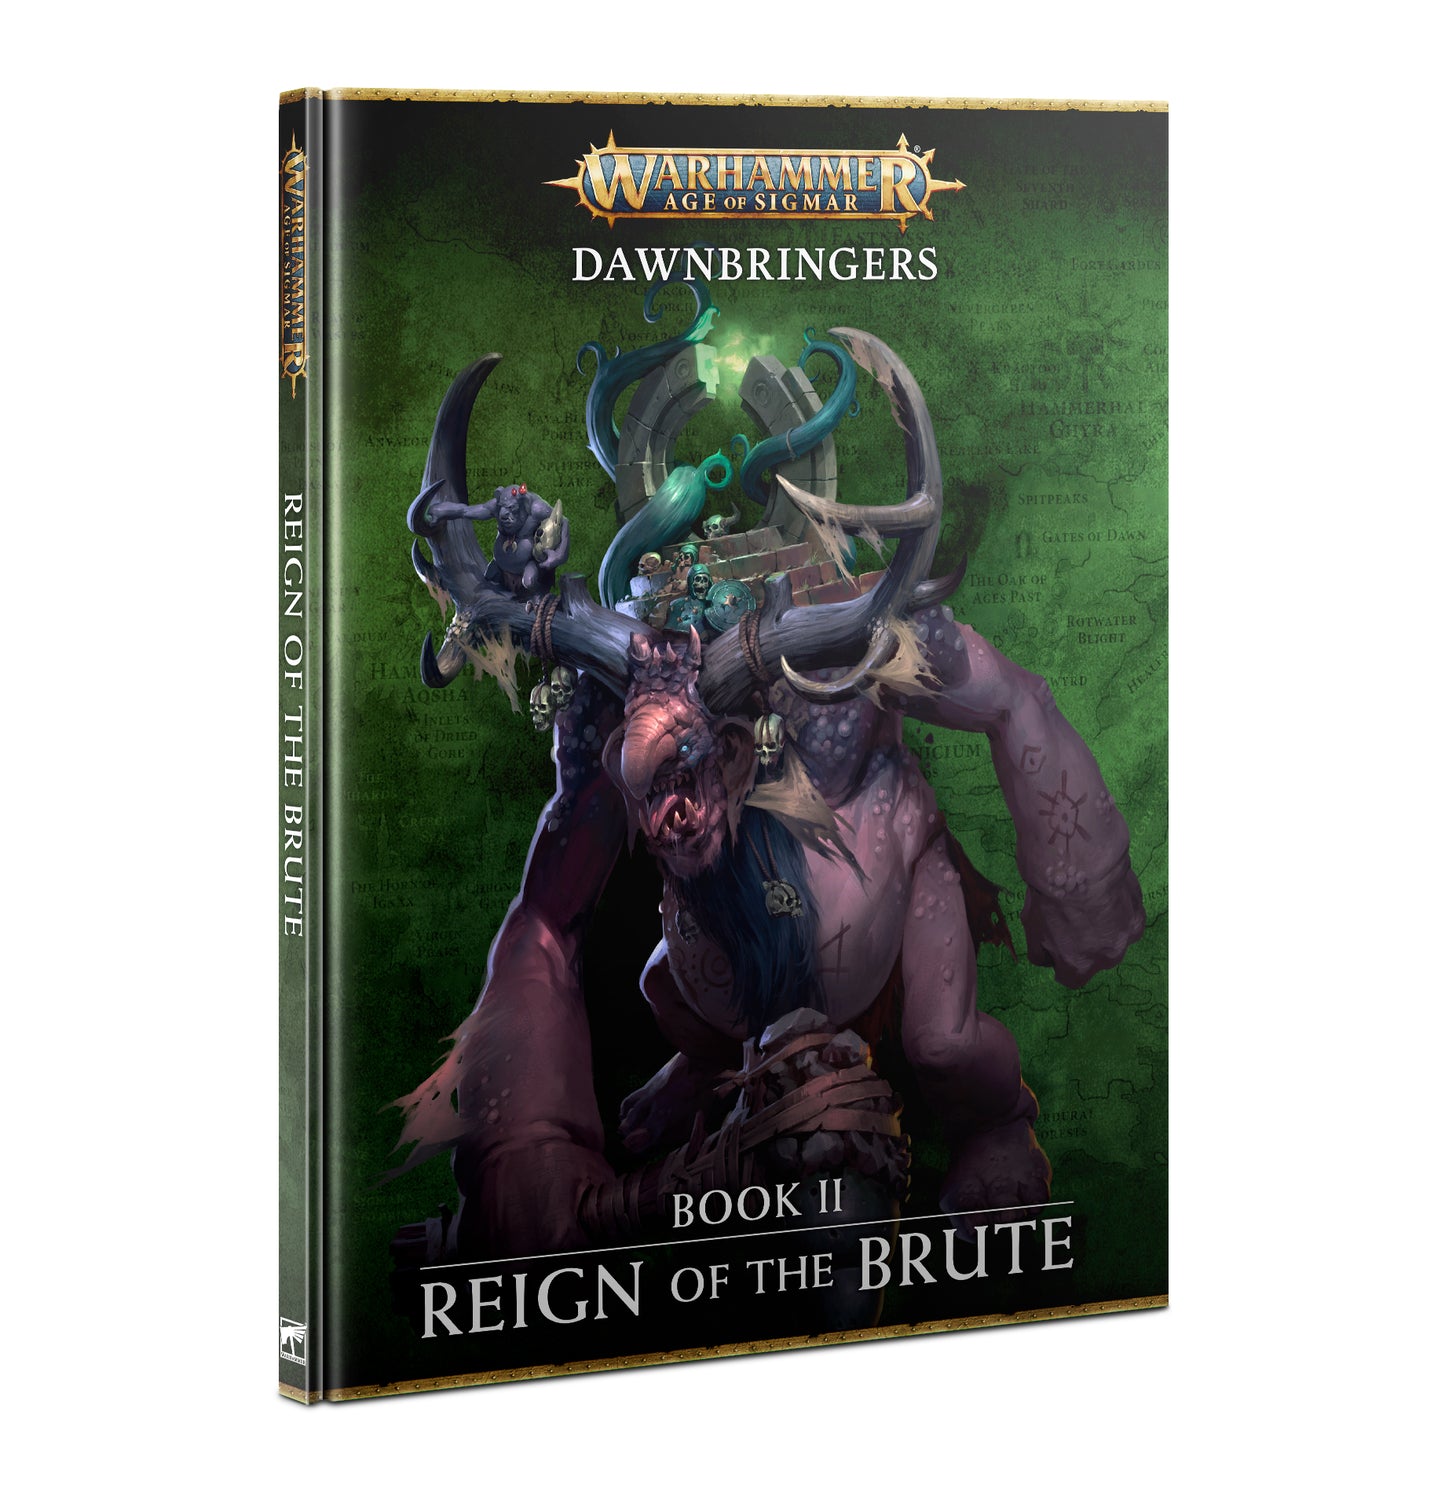 Warhammer Age of Sigmar: Dawnbringers - Reign of the Brute